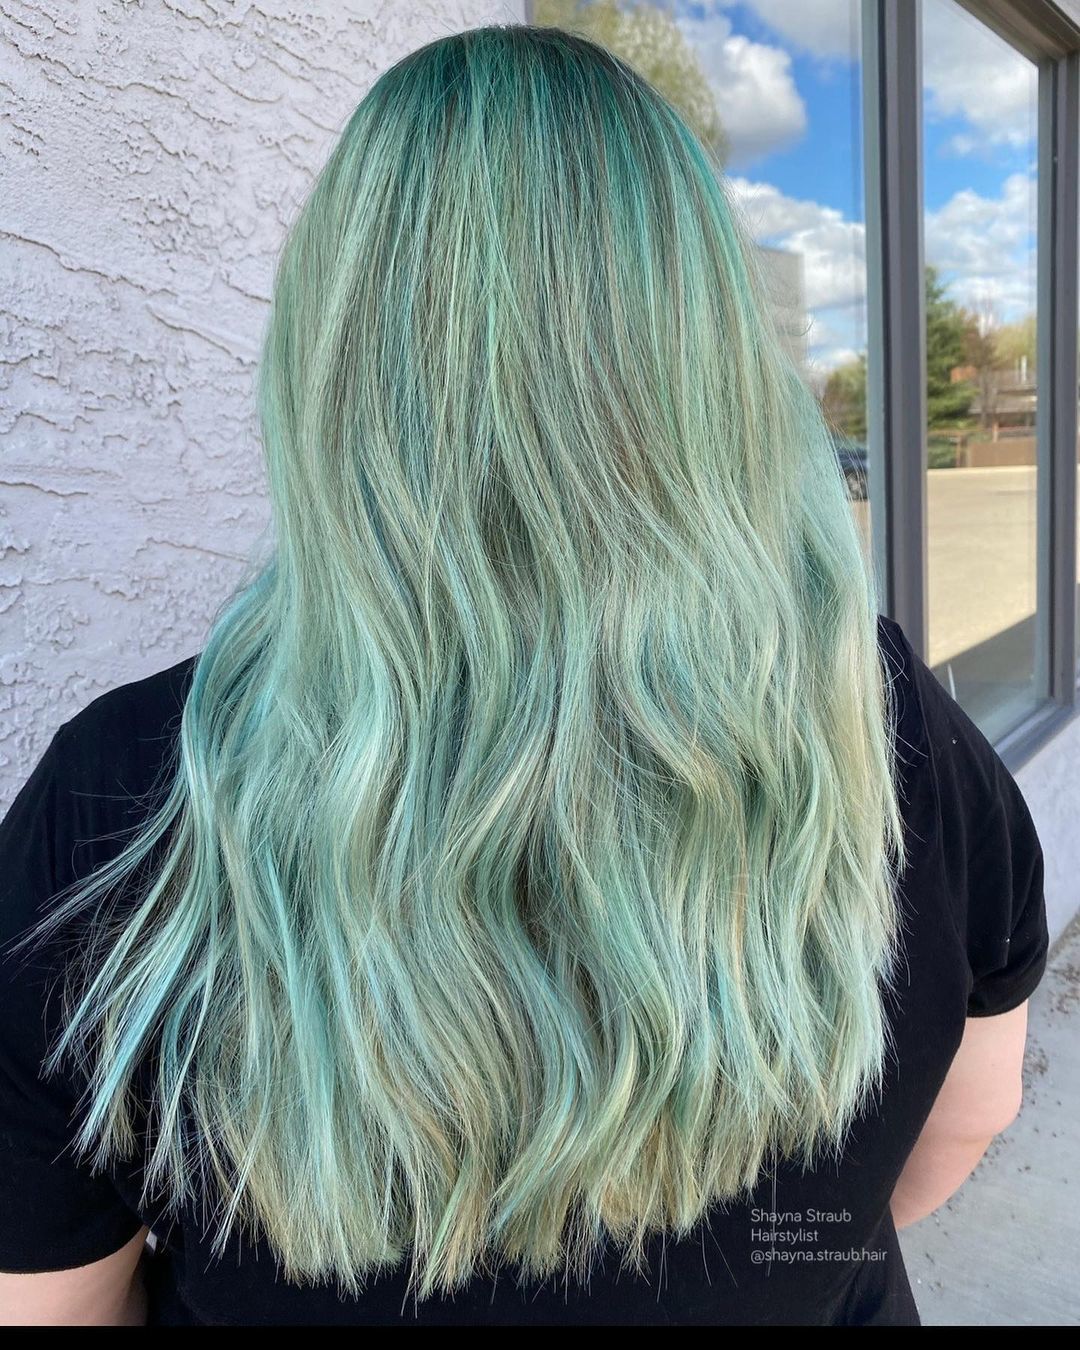 wanita dengan rambut panjang warna hijau pastel